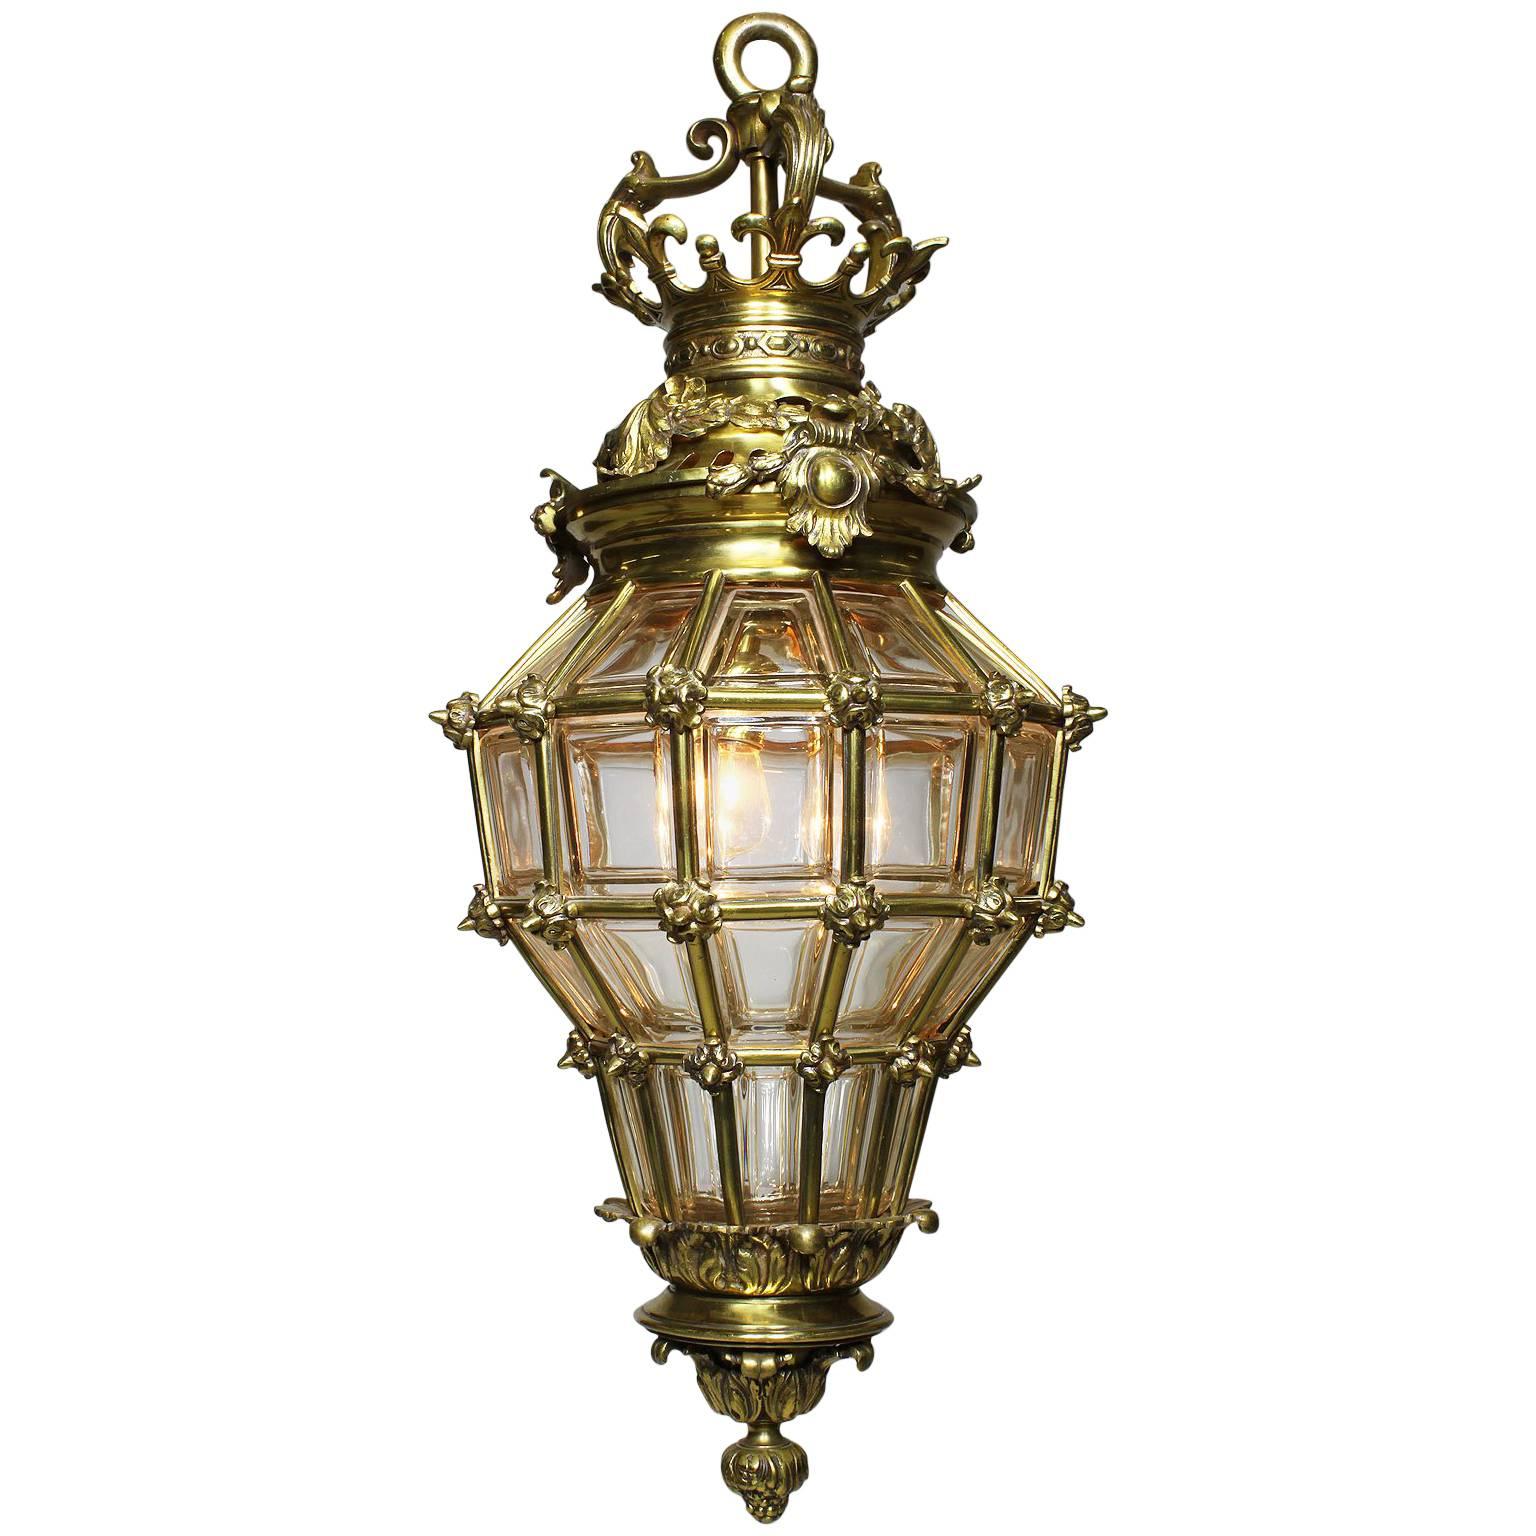 French Early 20th Century Louis XIV Style Gilt-Bronze "Versailles" Style Lantern